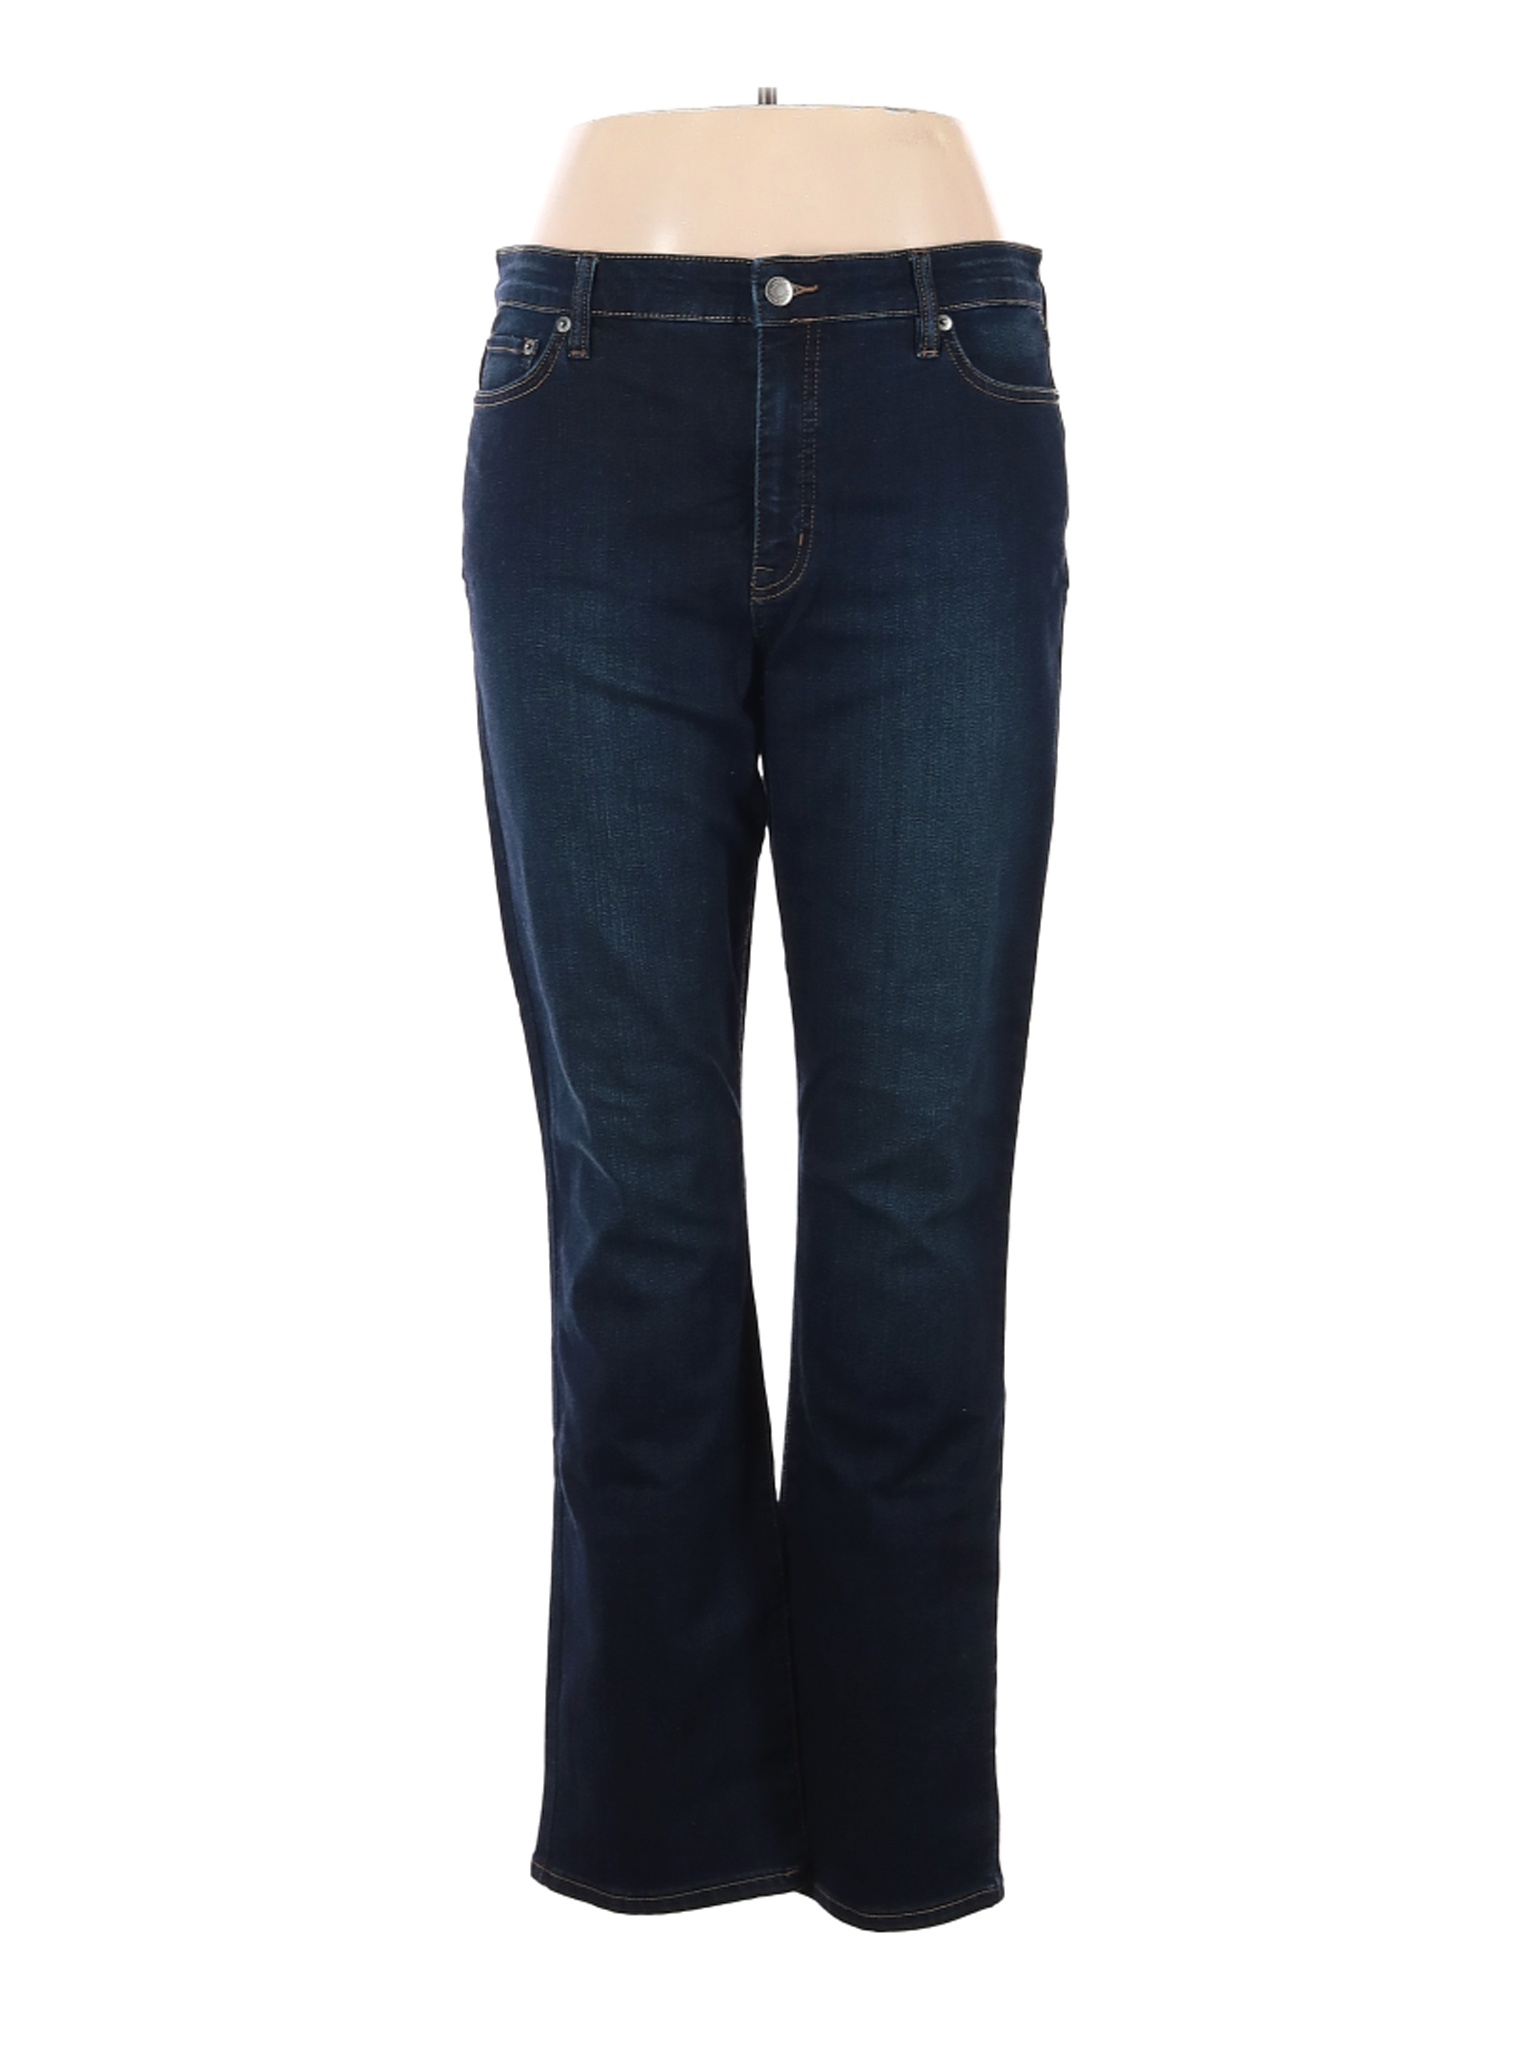 Lauren by Ralph Lauren Women Blue Jeans 14 | eBay